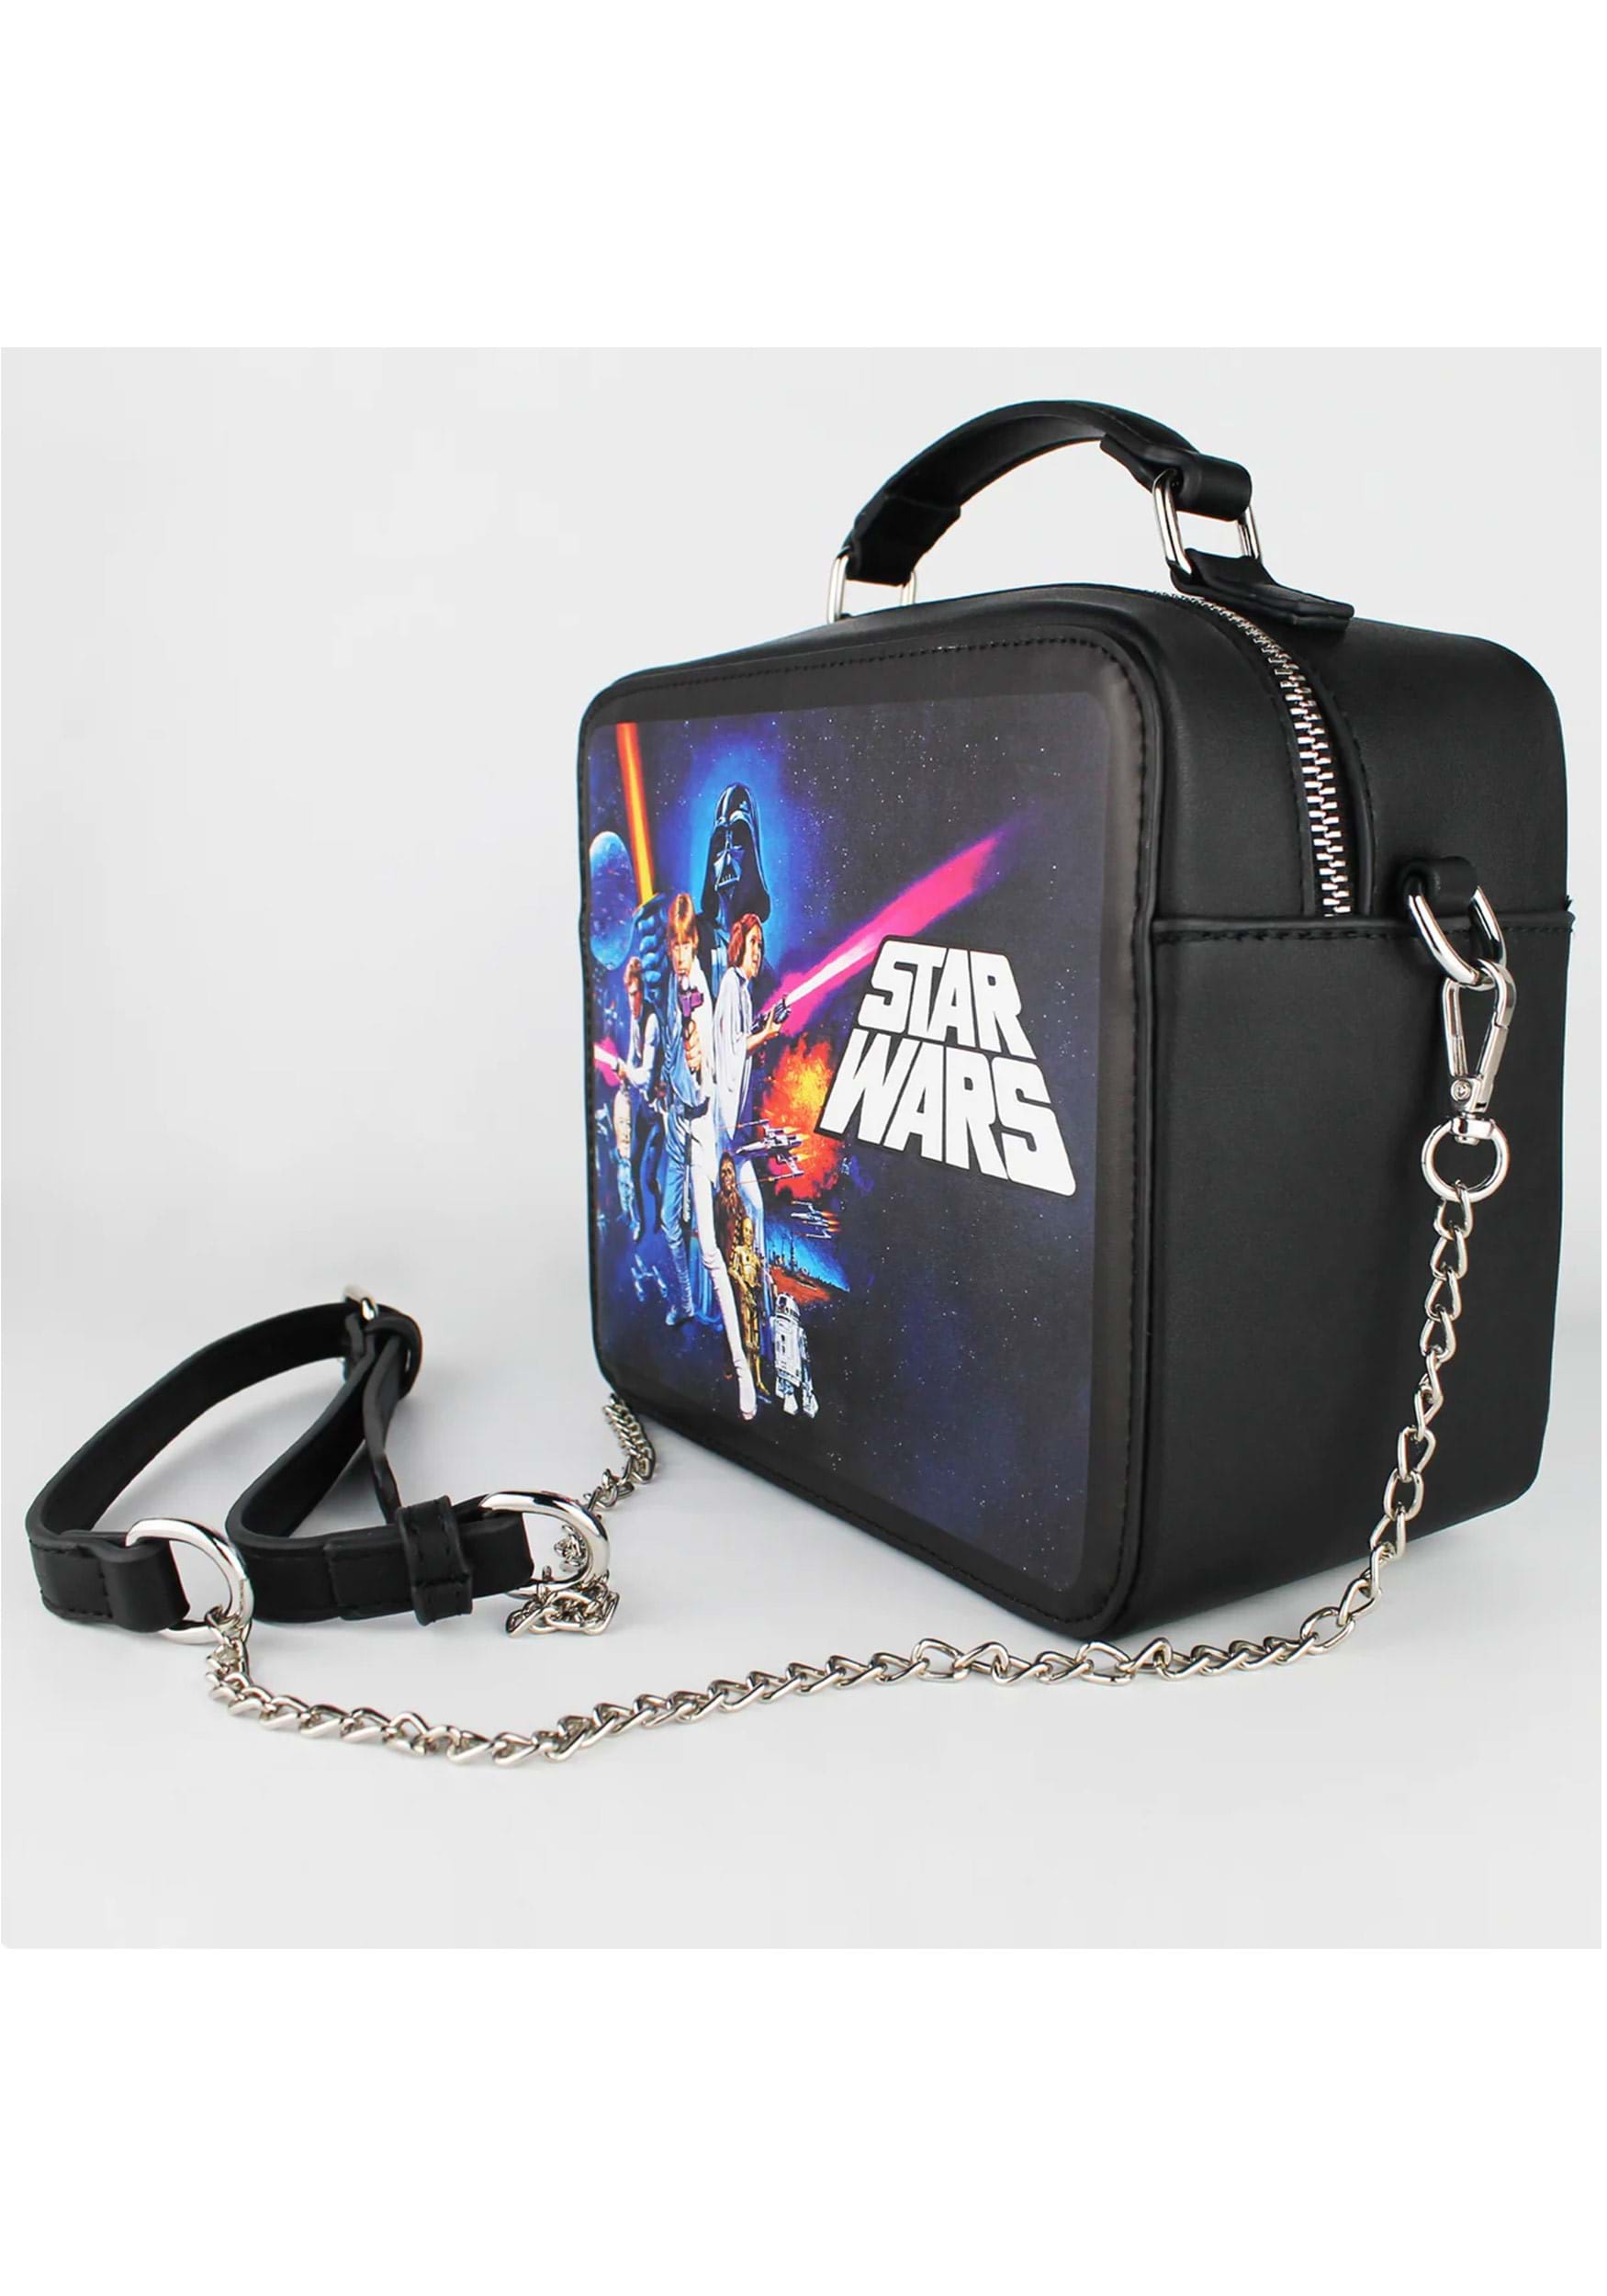 https://images.fun.com/products/92909/2-1-277912/star-wars-lunchbox-purse-alt-1.jpg